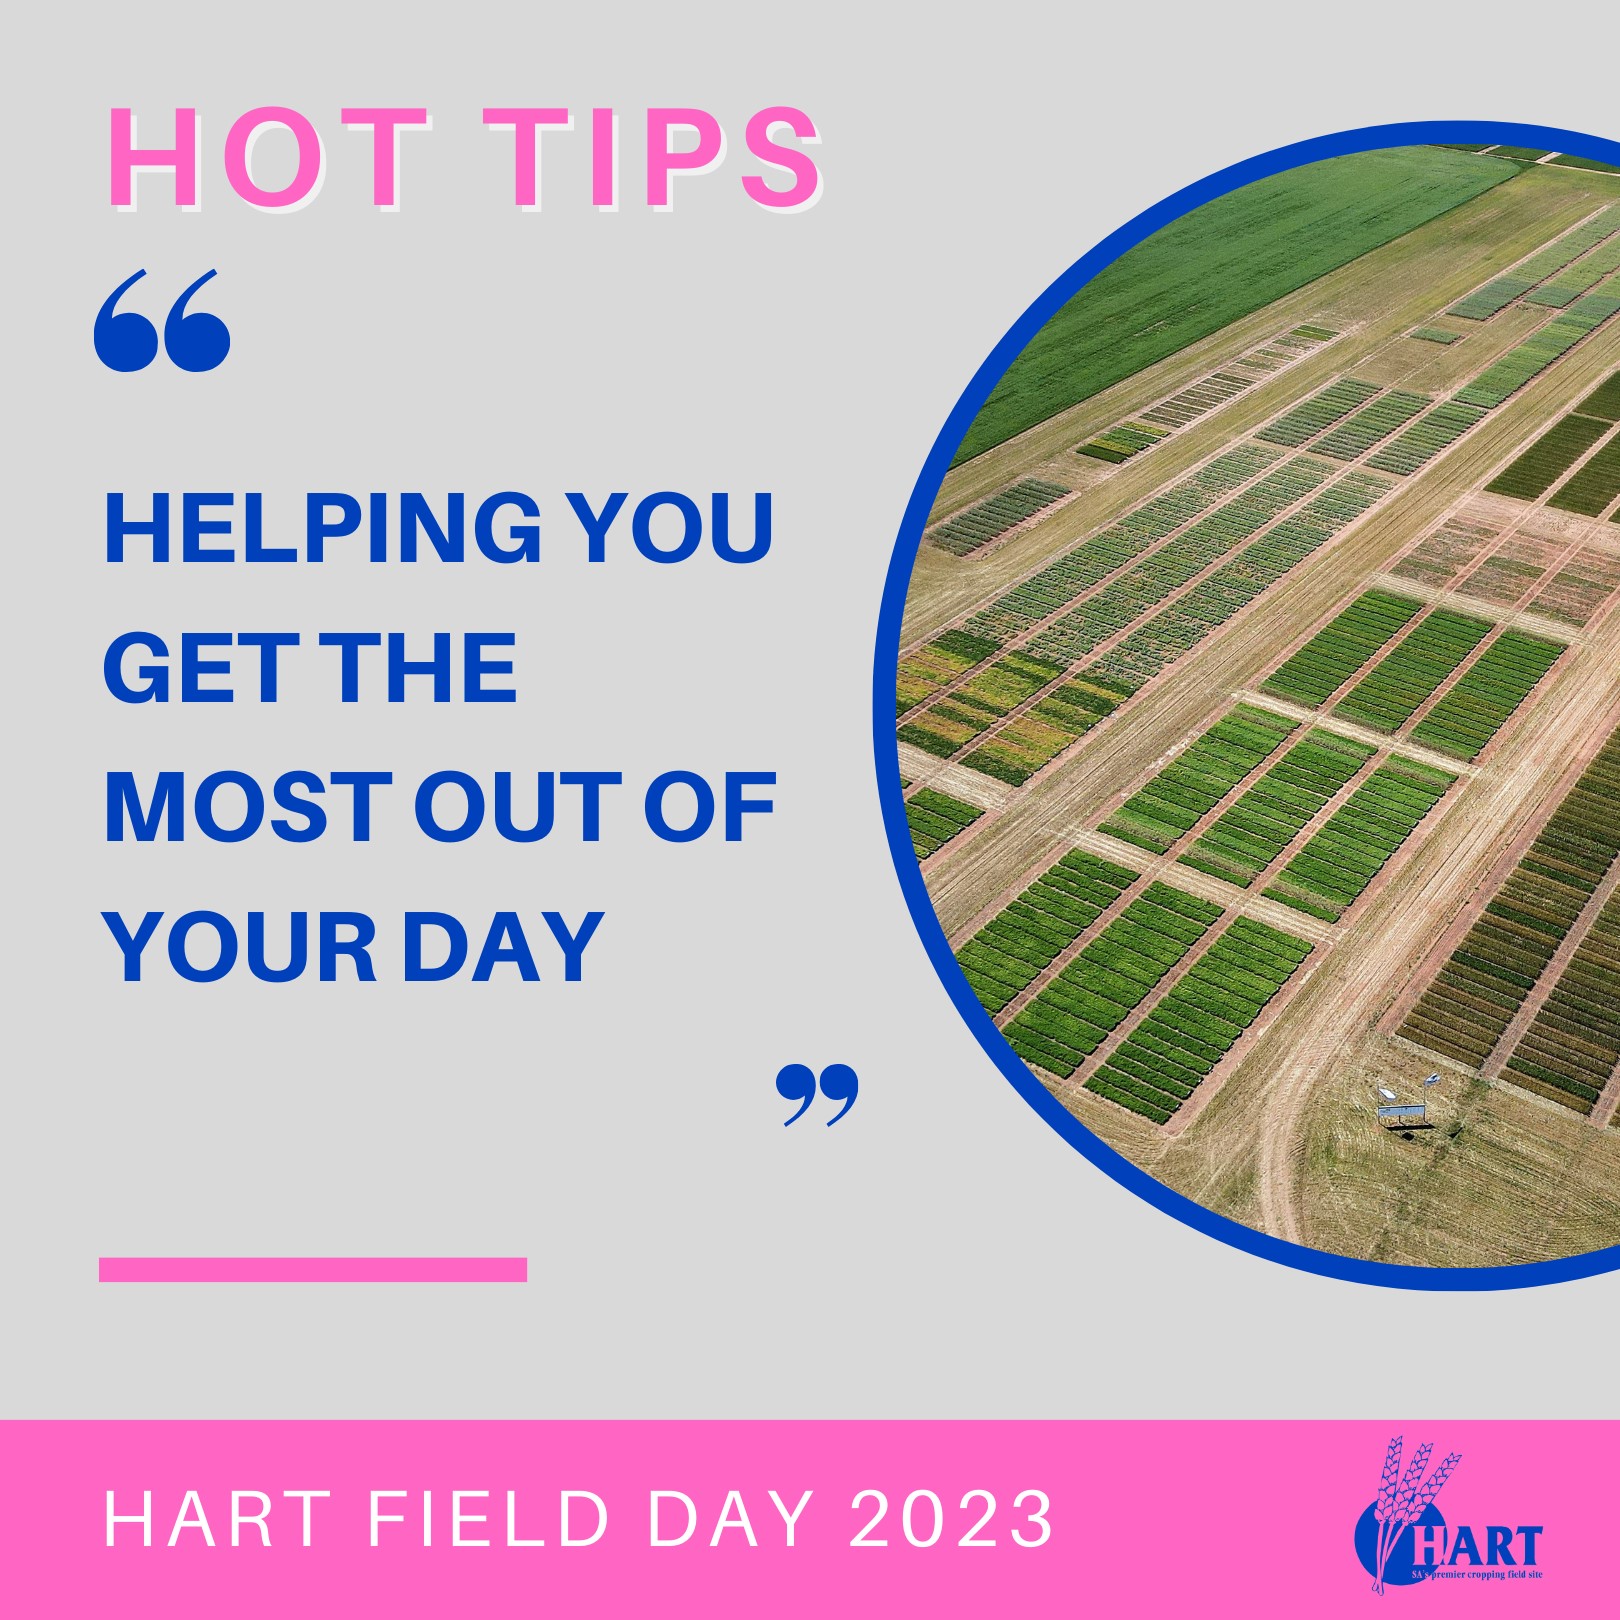 Hart Field Day 2023 - Hot Tips